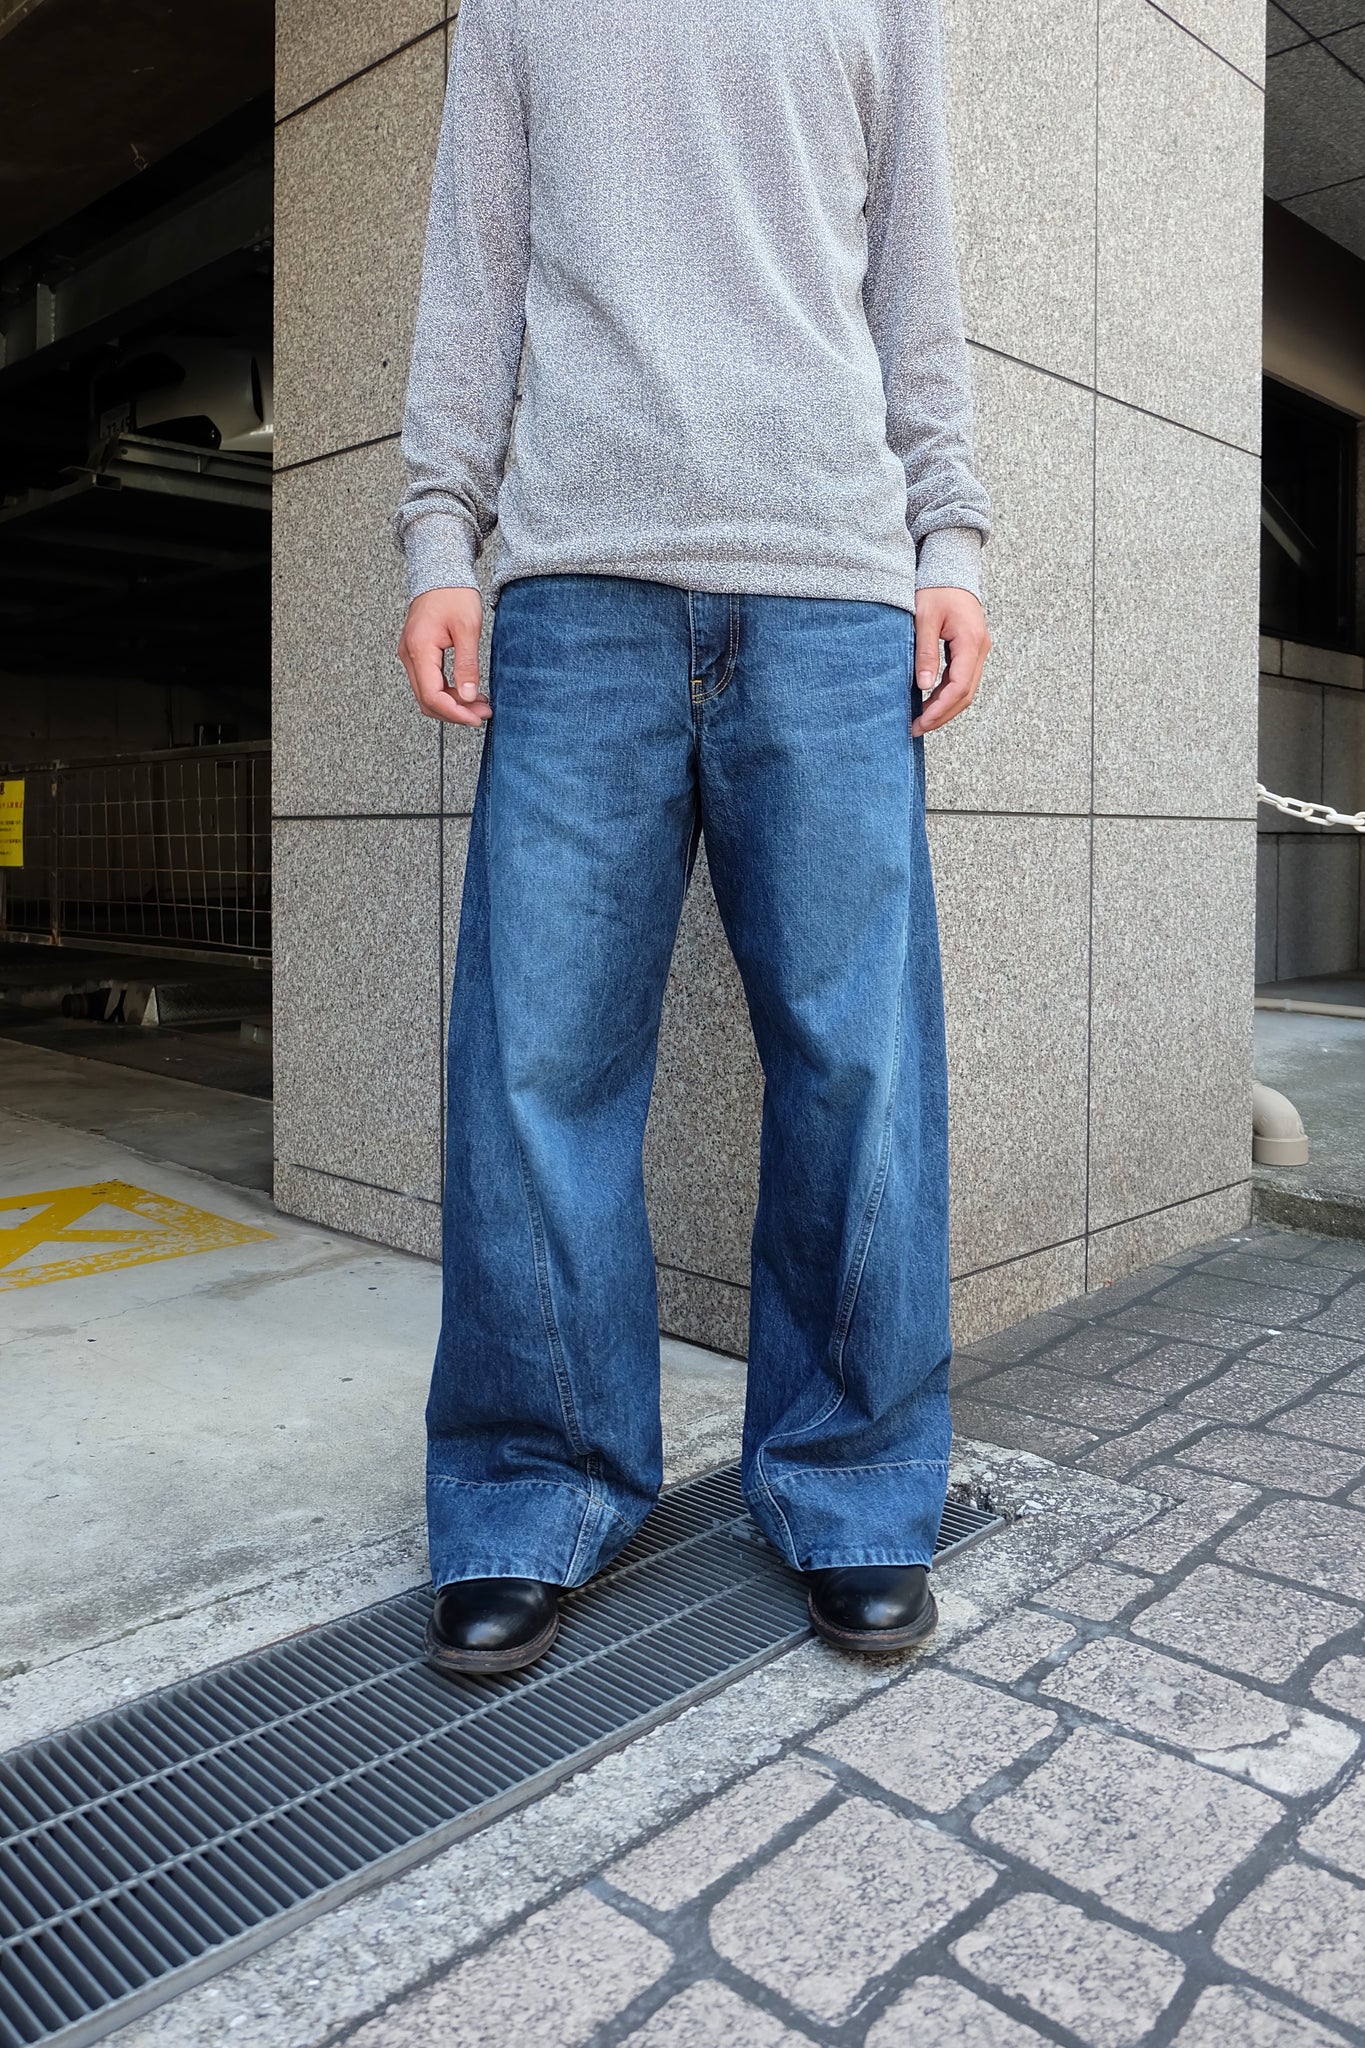 Styling image using Yuki 23aw Twisted Jeans